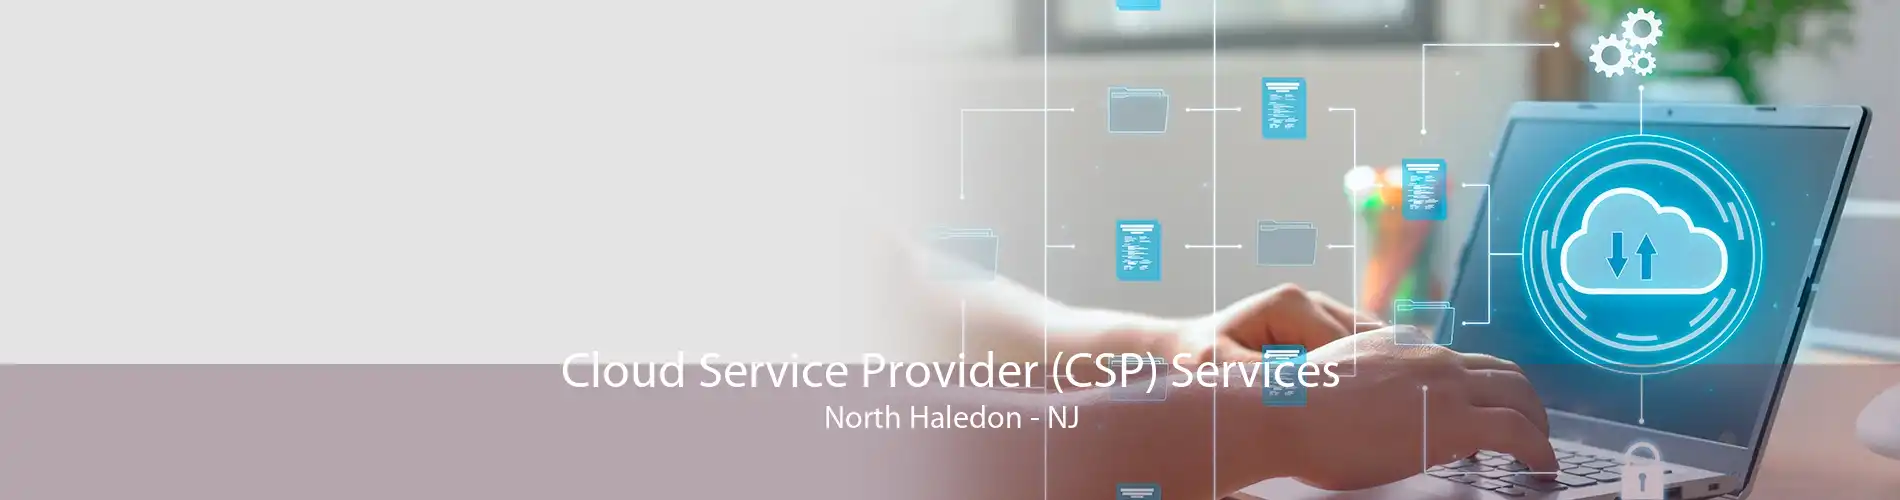 Cloud Service Provider (CSP) Services North Haledon - NJ